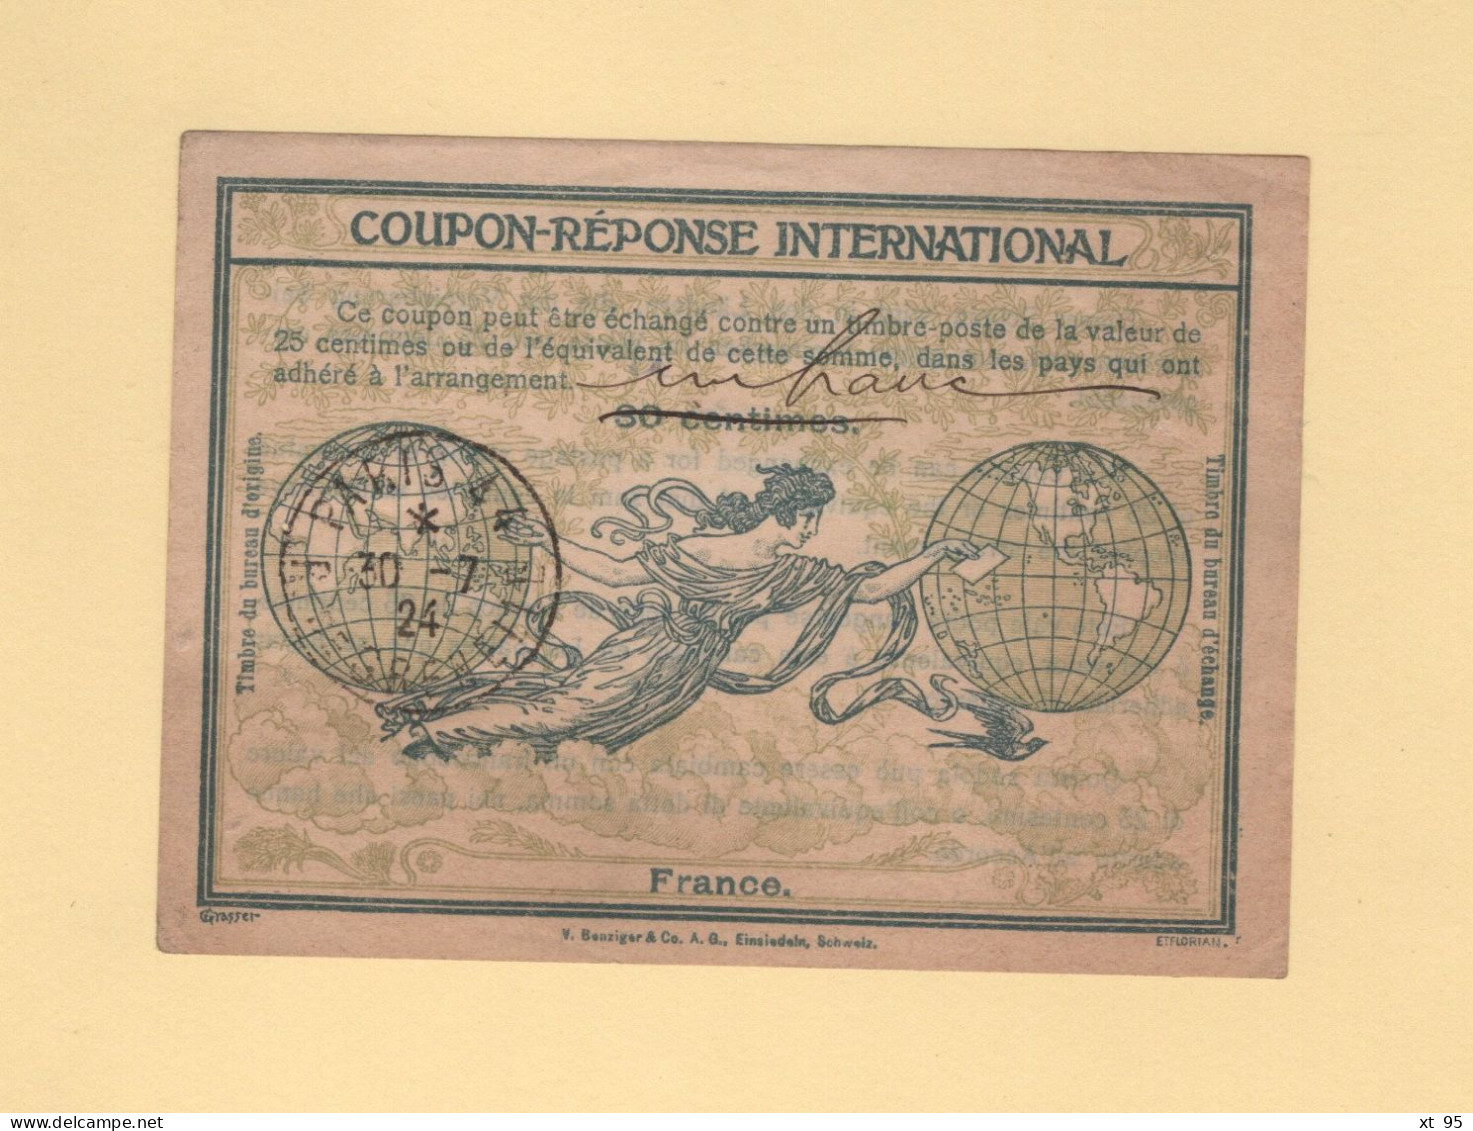 Coupon Reponse International - Surcharge Un Franc Manuscrite - Paris - 1924 - Antwortscheine